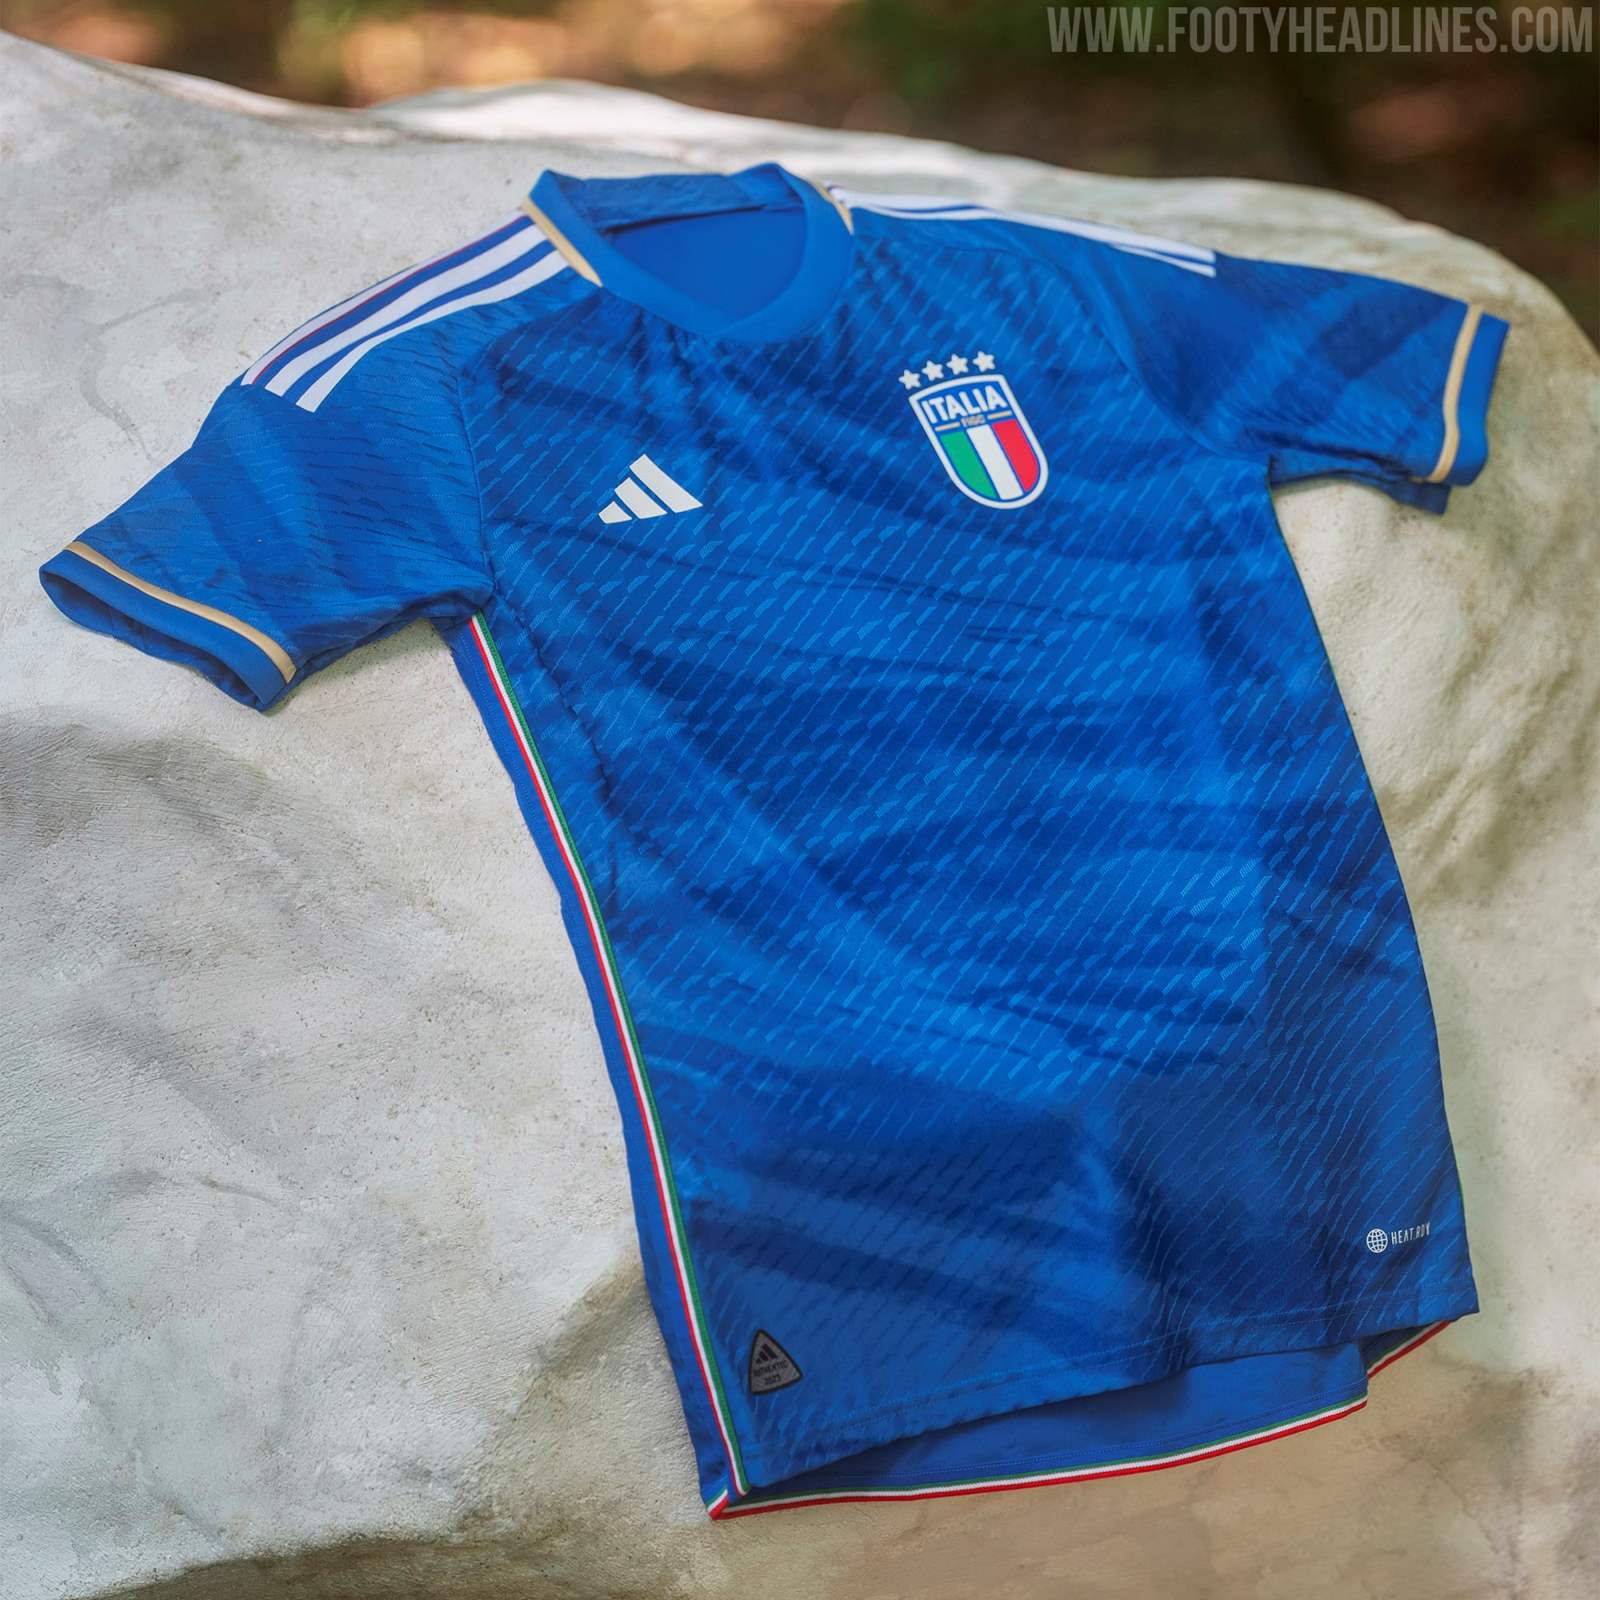 Adidas Italy 2022 Beckenbauer Jacket Released - Footy Headlines